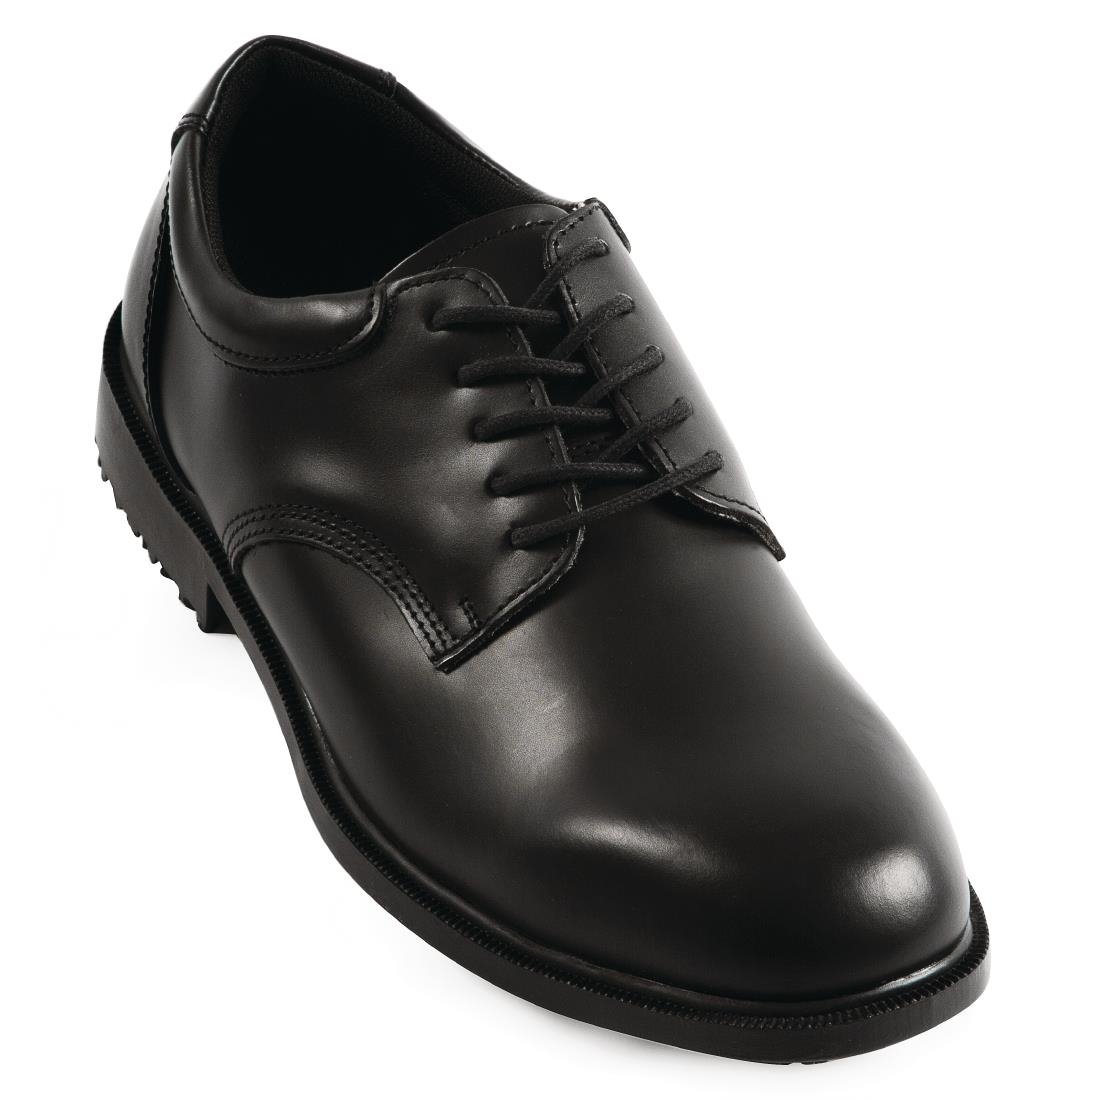 Shoes For Crews Mens Dress Shoe B110